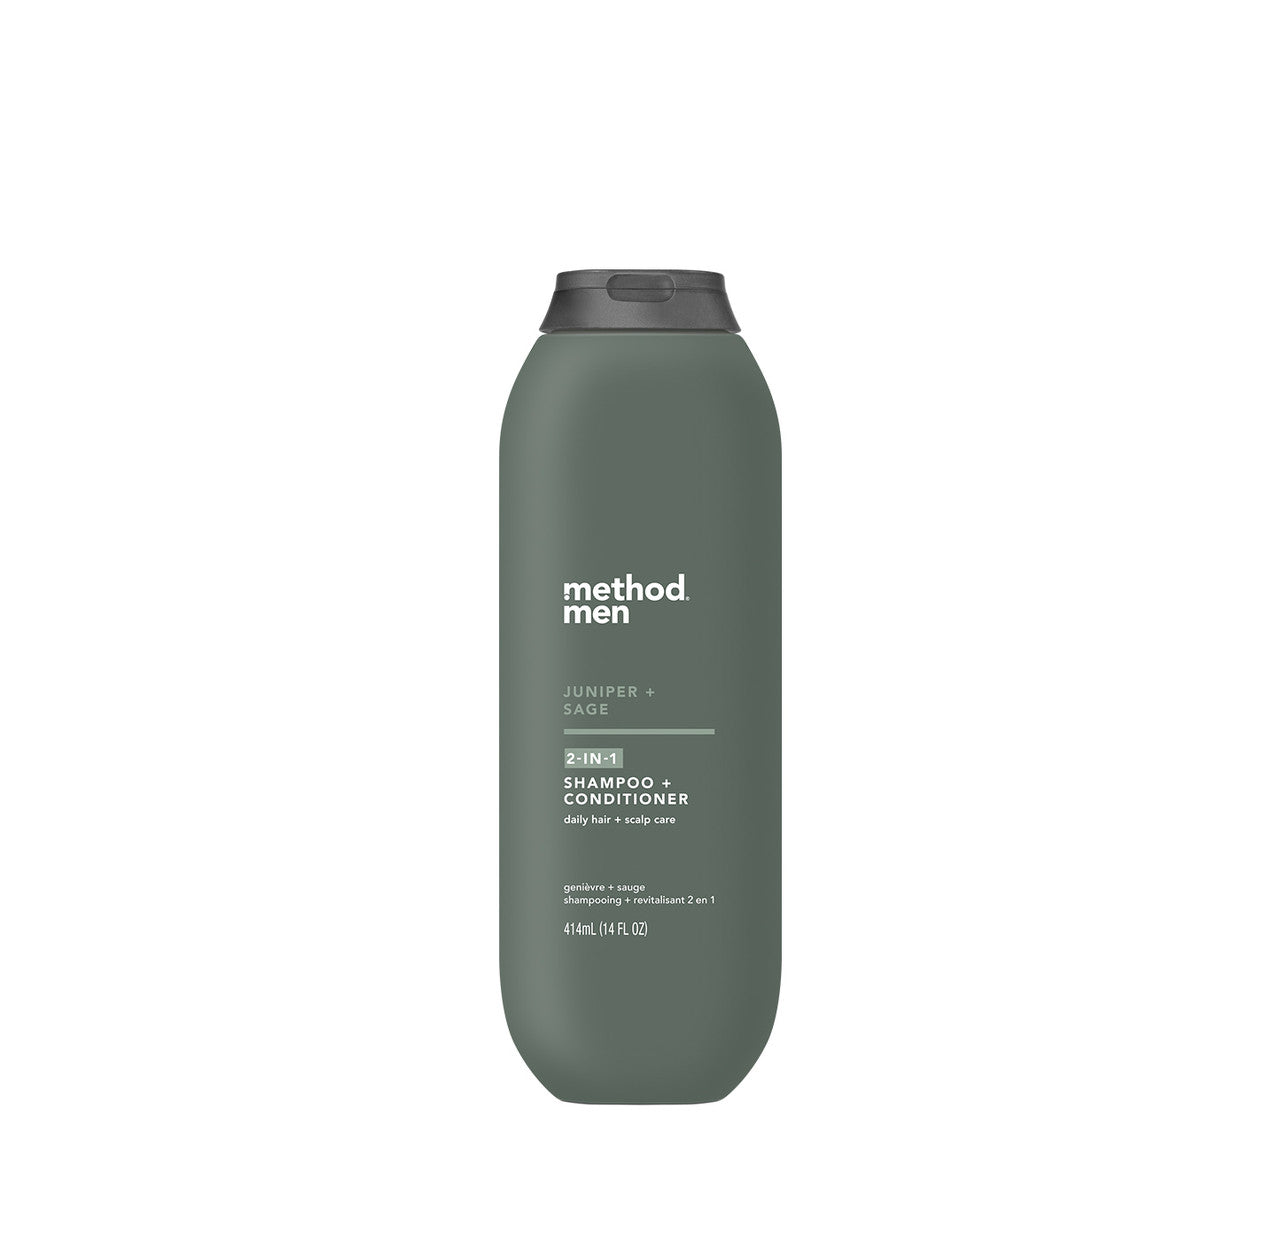 Method Men Shampoo & Conditioner 2 in 1 Juniper & Sage 14 oz Bottle